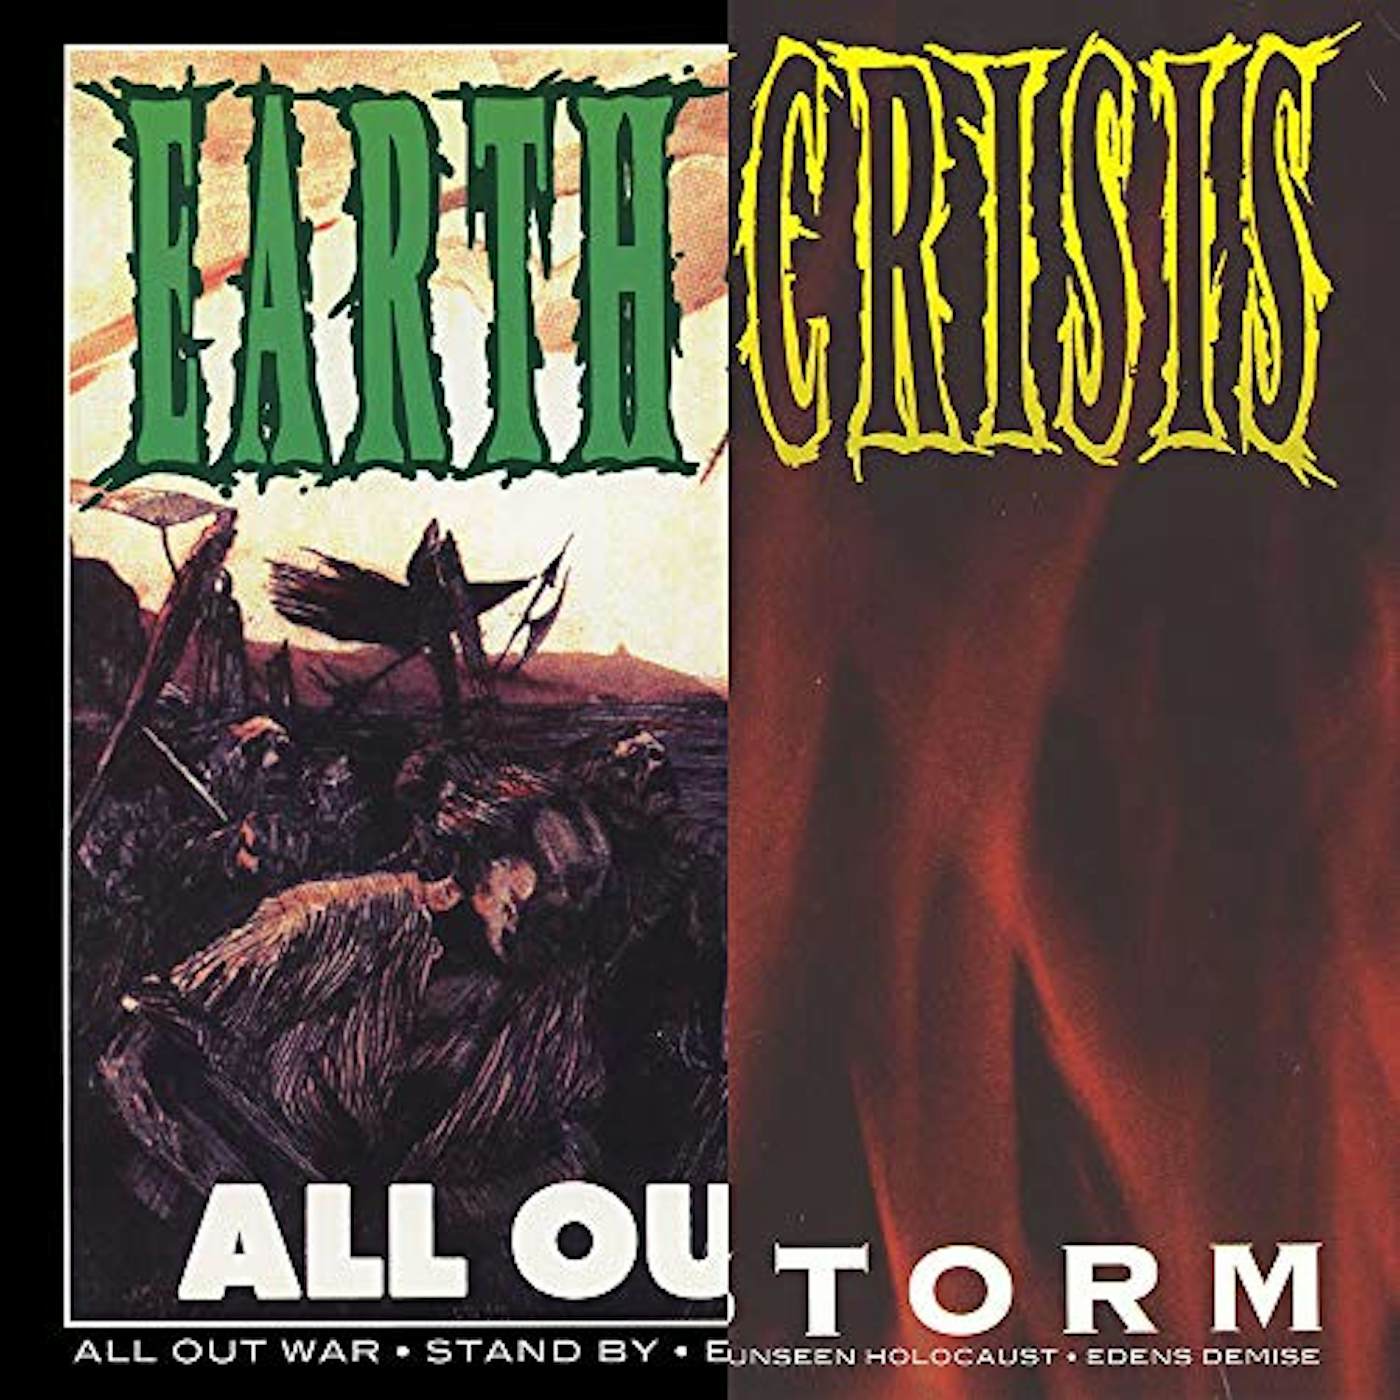 Earth Crisis All Out War / Firestorm Vinyl Record